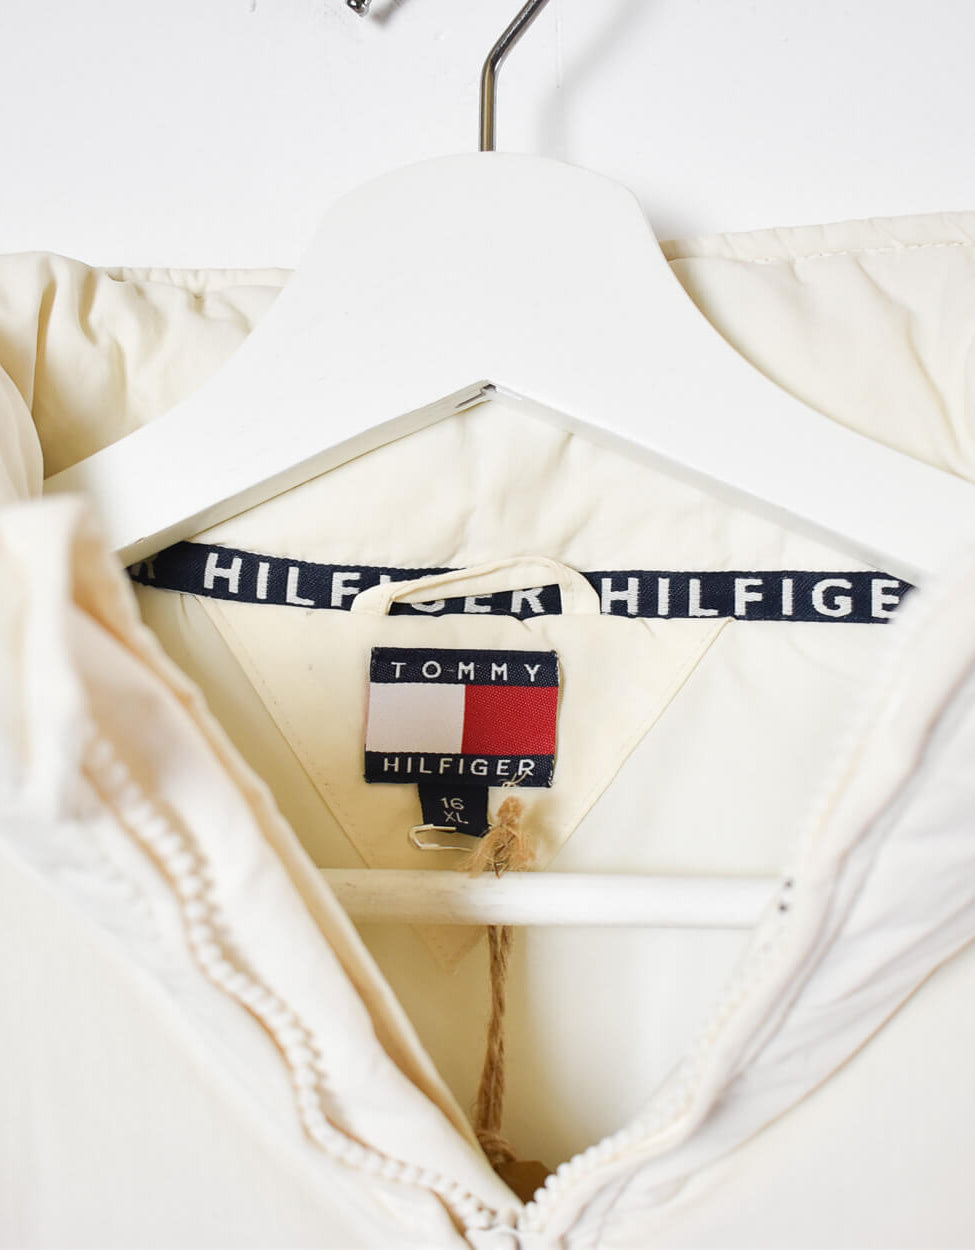 Neutral Tommy Hilfiger Women's Jacket - X-Large